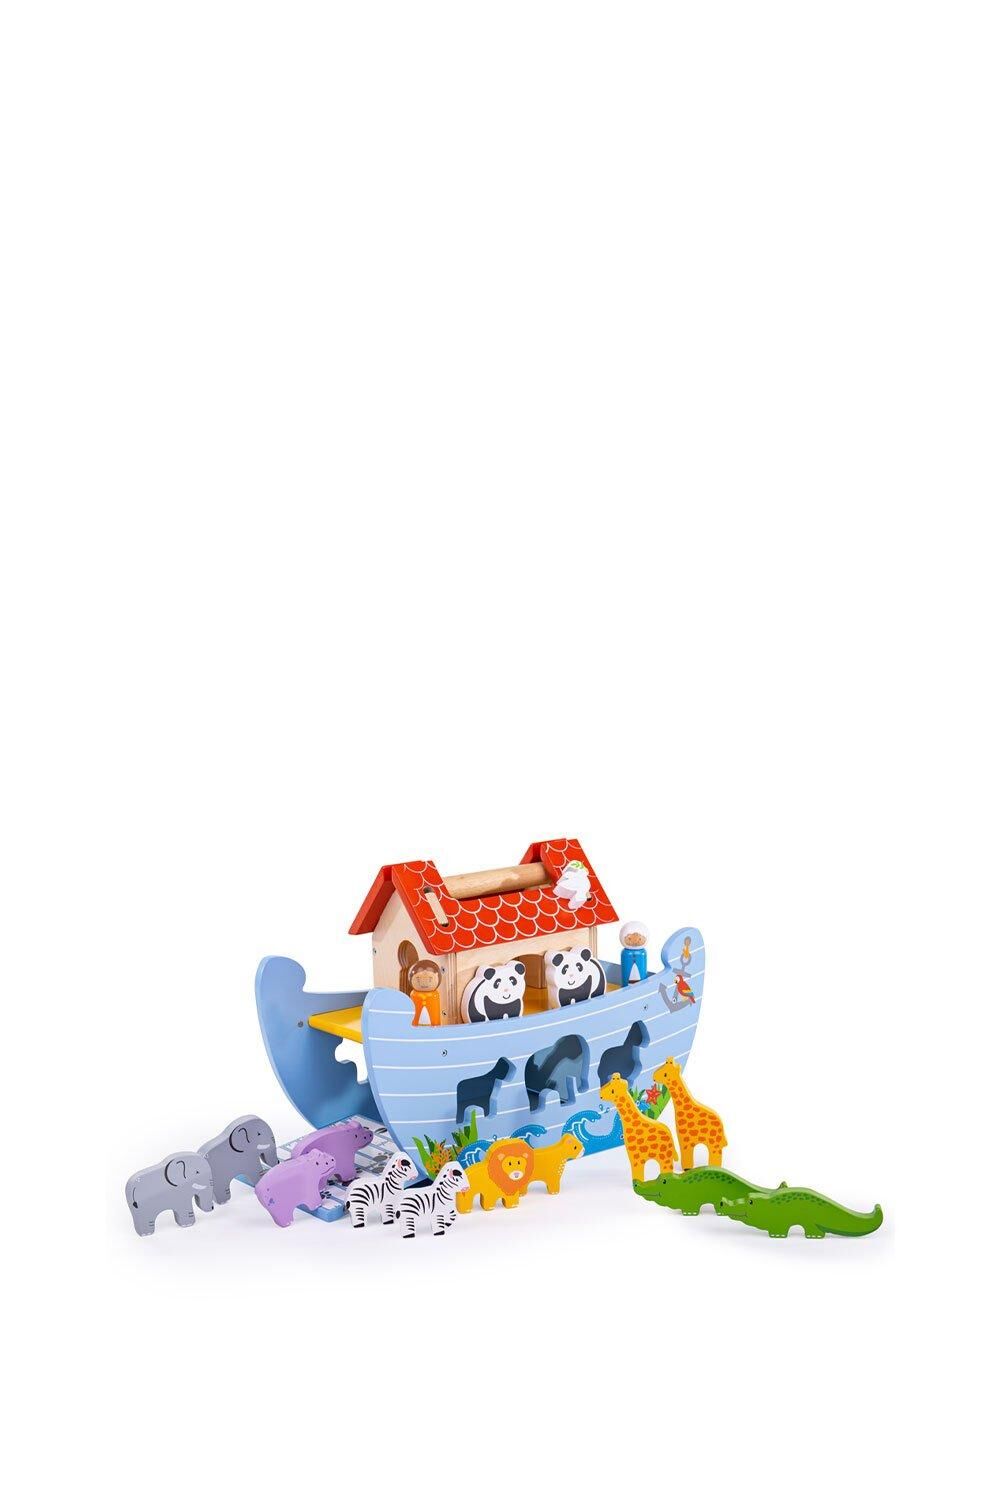 Bigjigs Toys Noah's Ark Playset